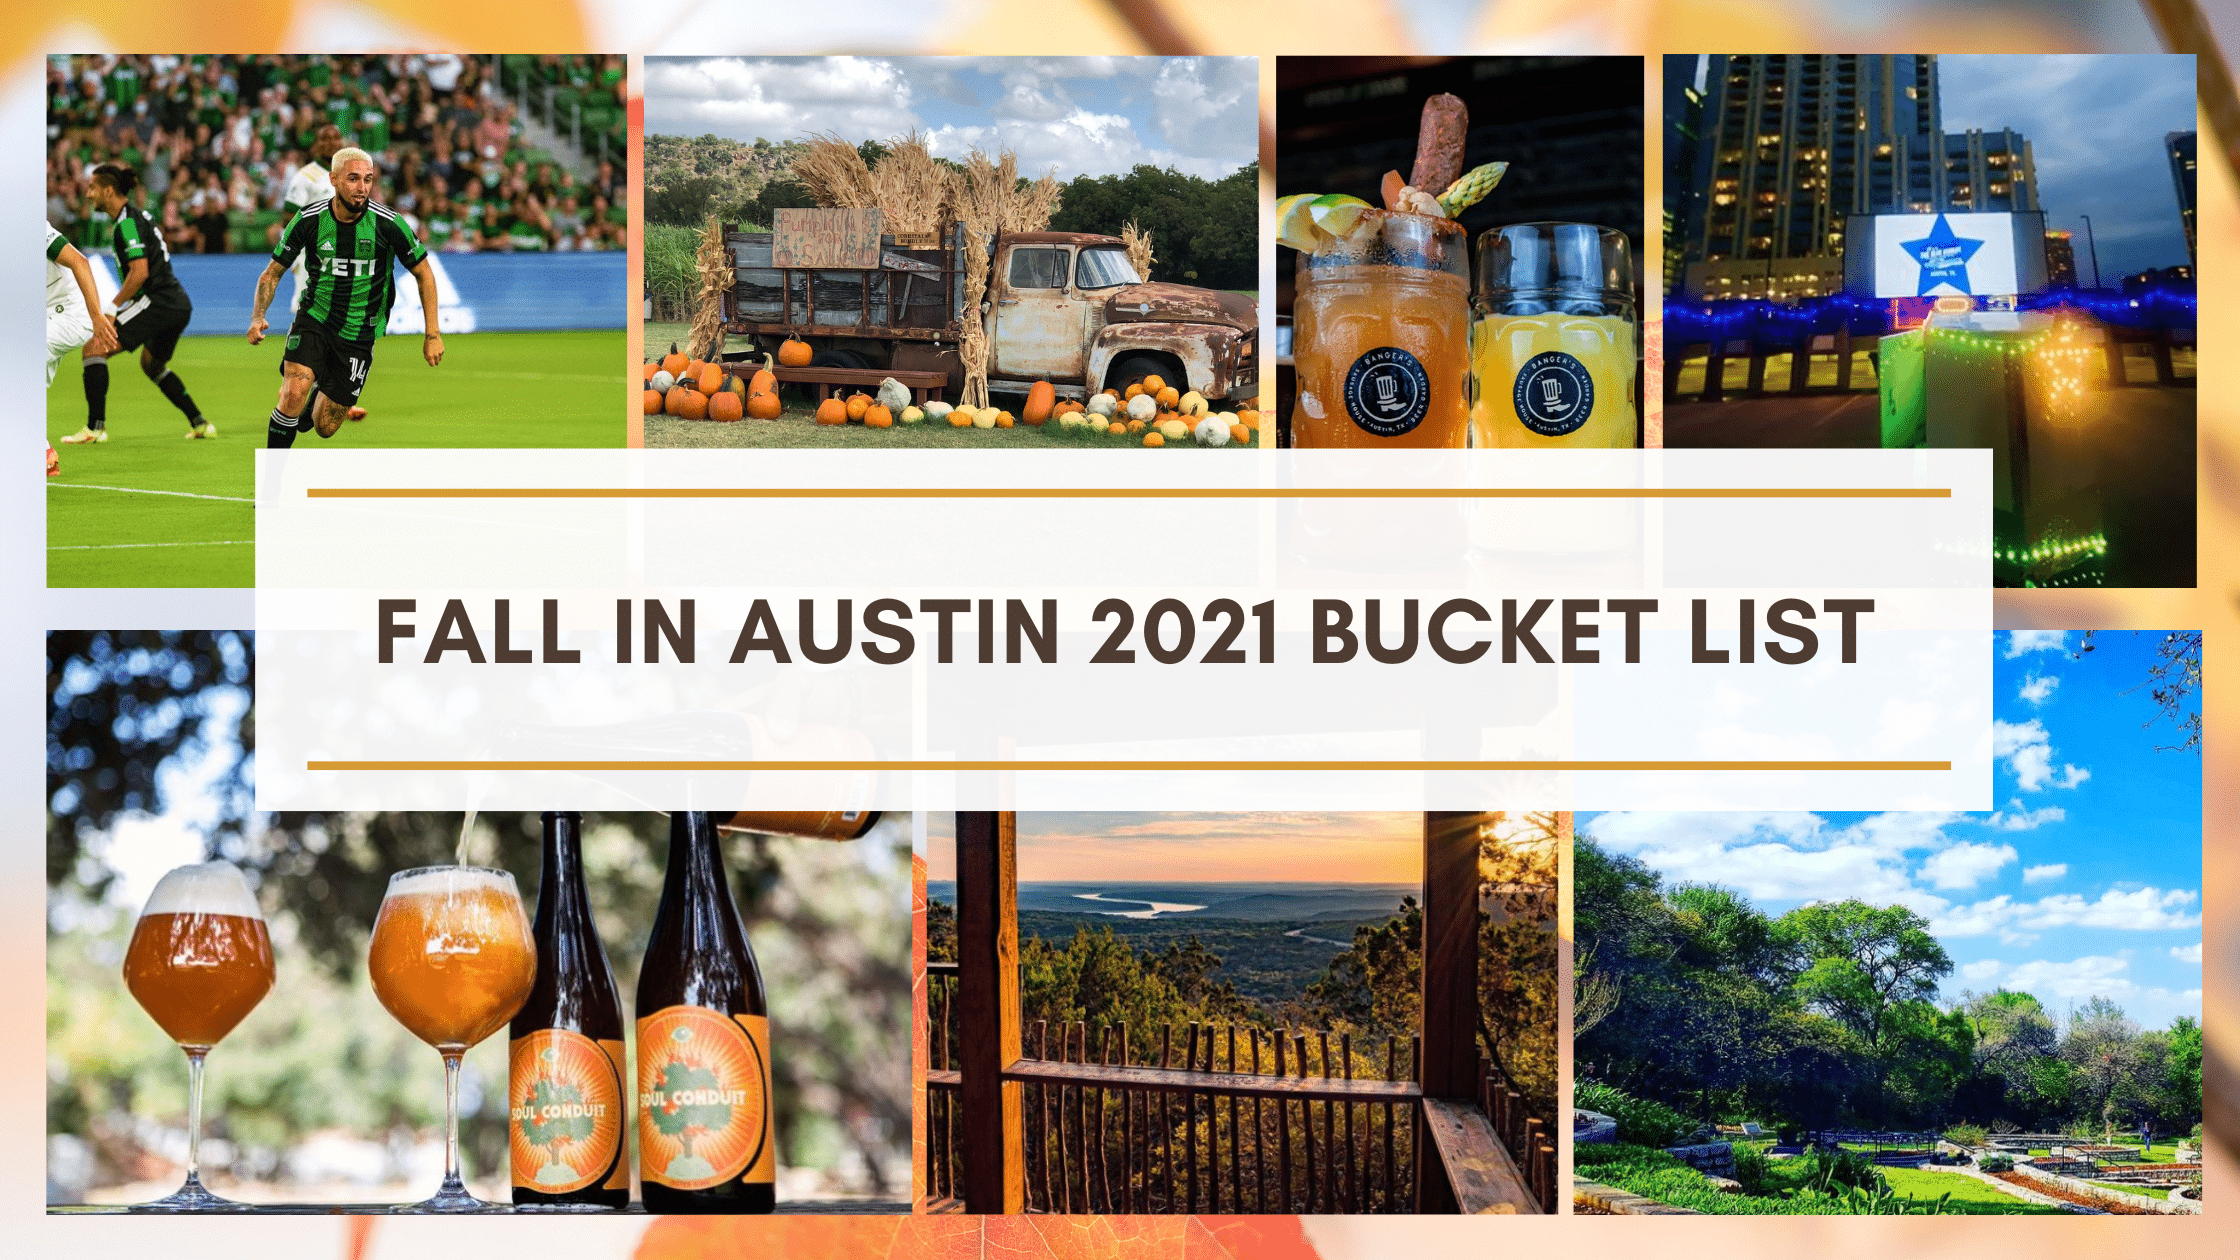 Fall in Austin 2021 Bucket List